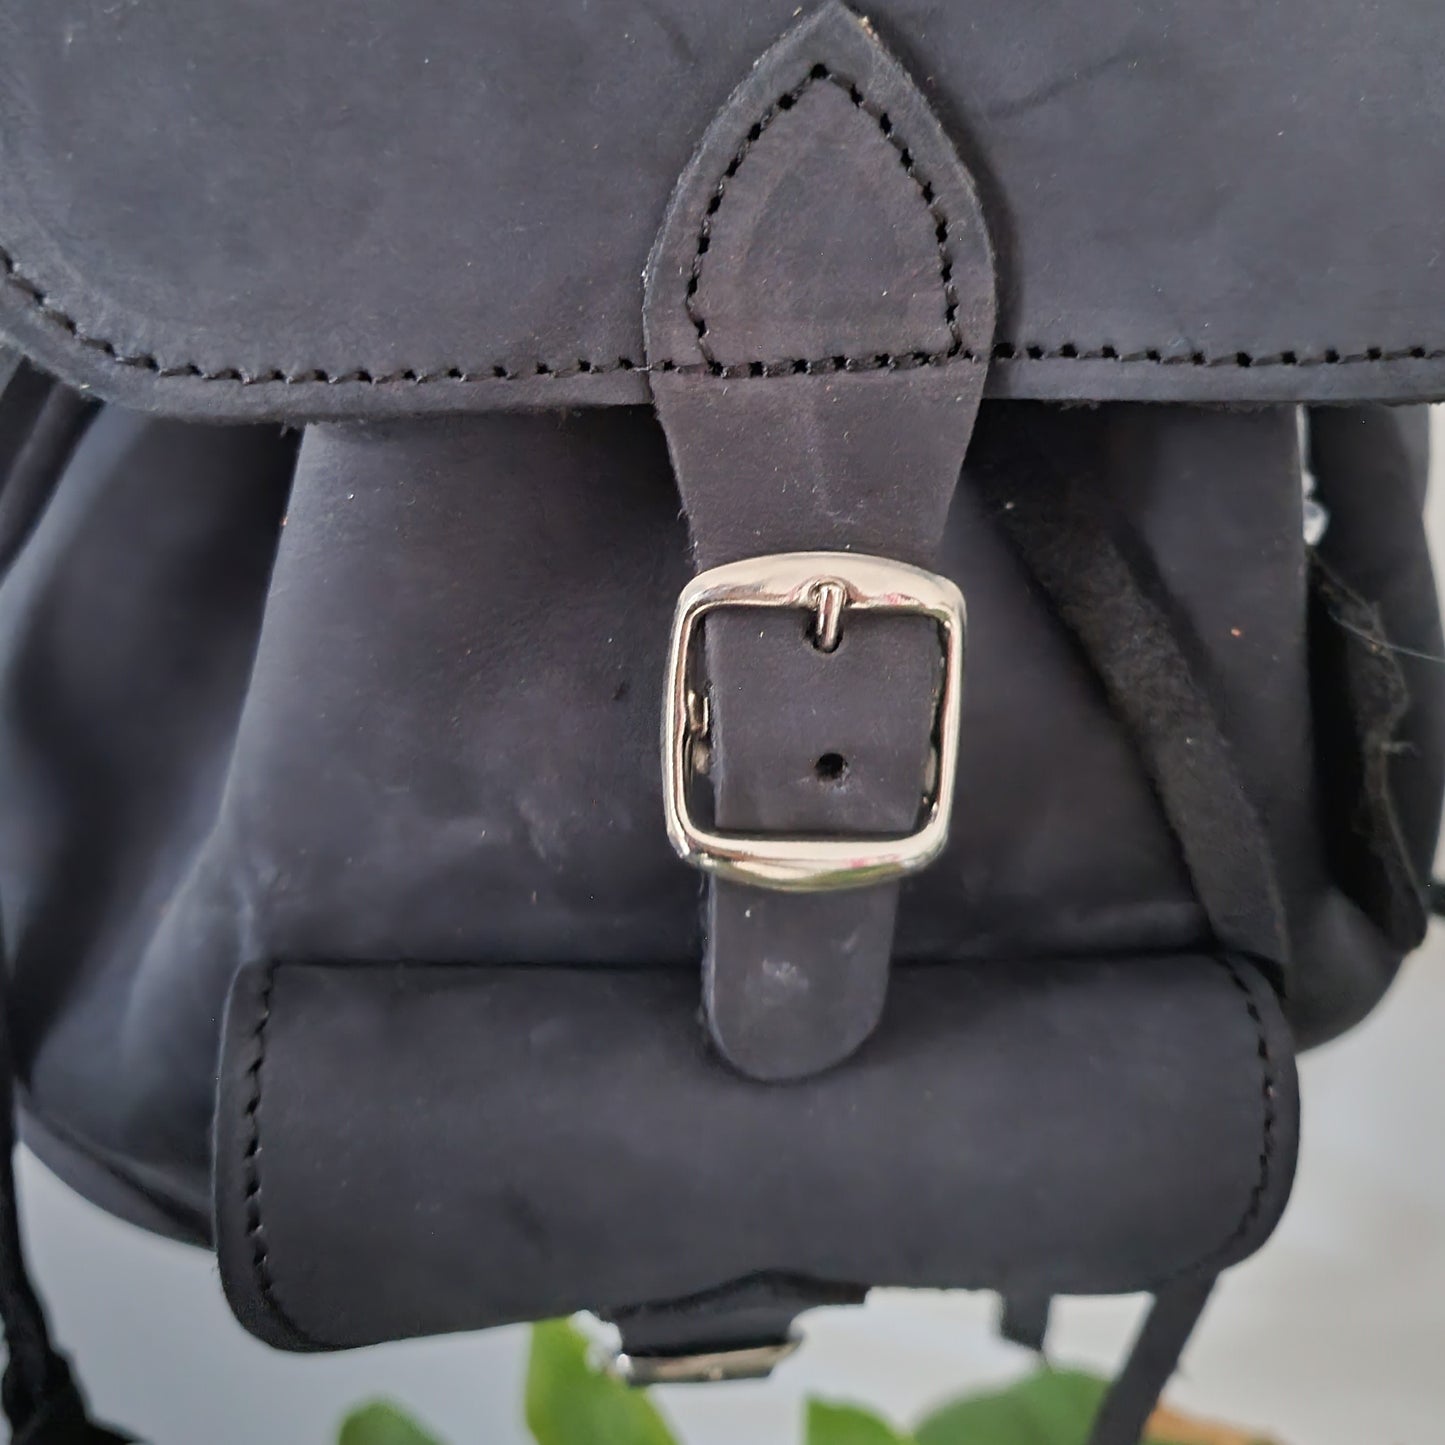 Small black backbag